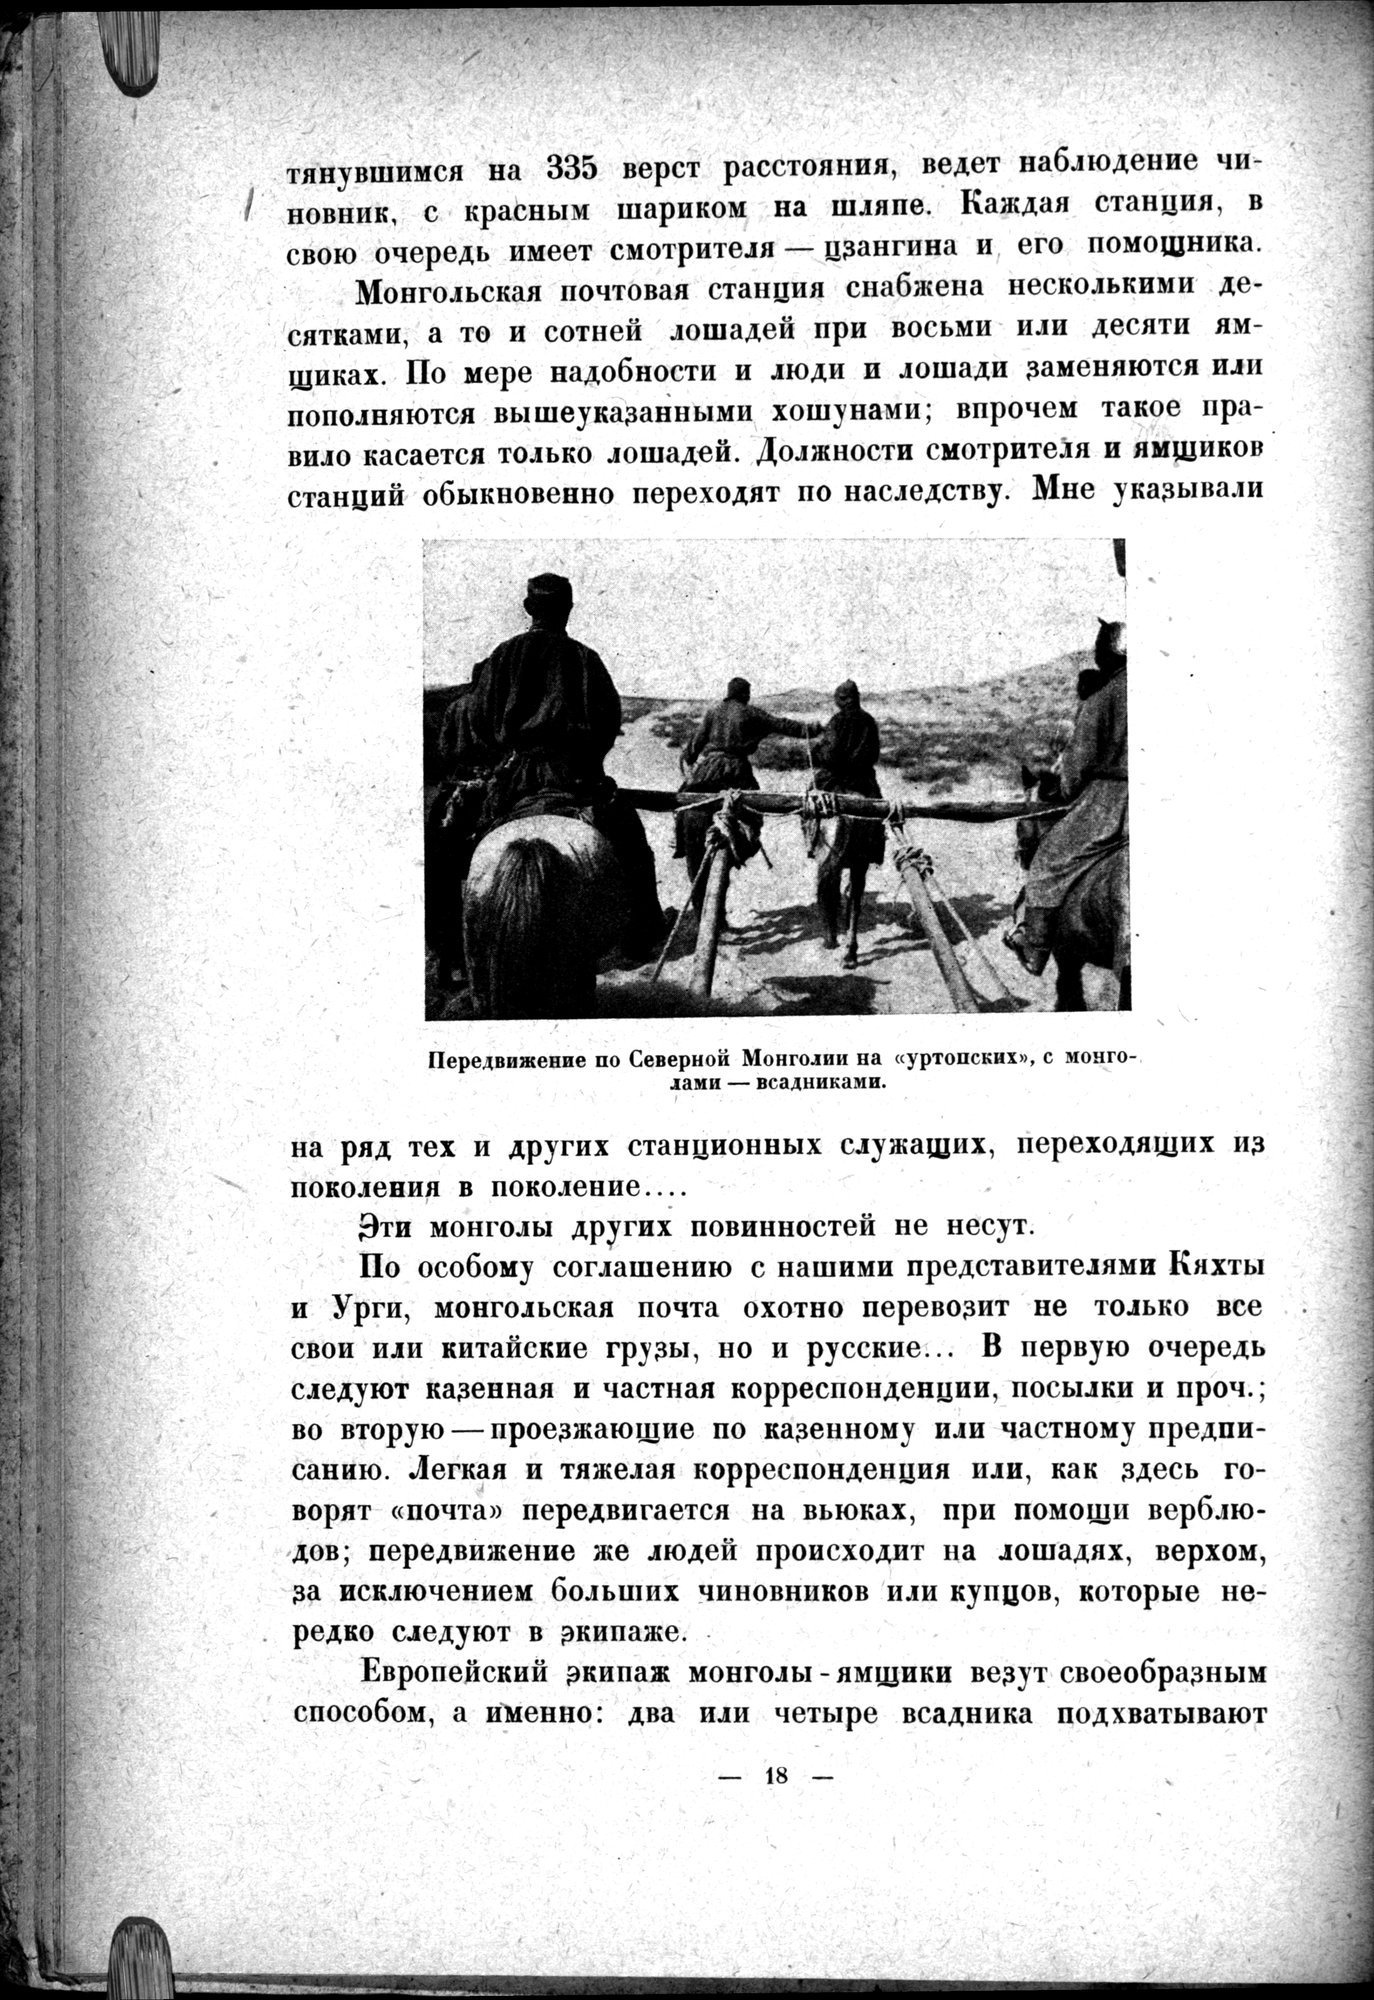 Mongoliya i Amdo i mertby gorod Khara-Khoto : vol.1 / Page 34 (Grayscale High Resolution Image)